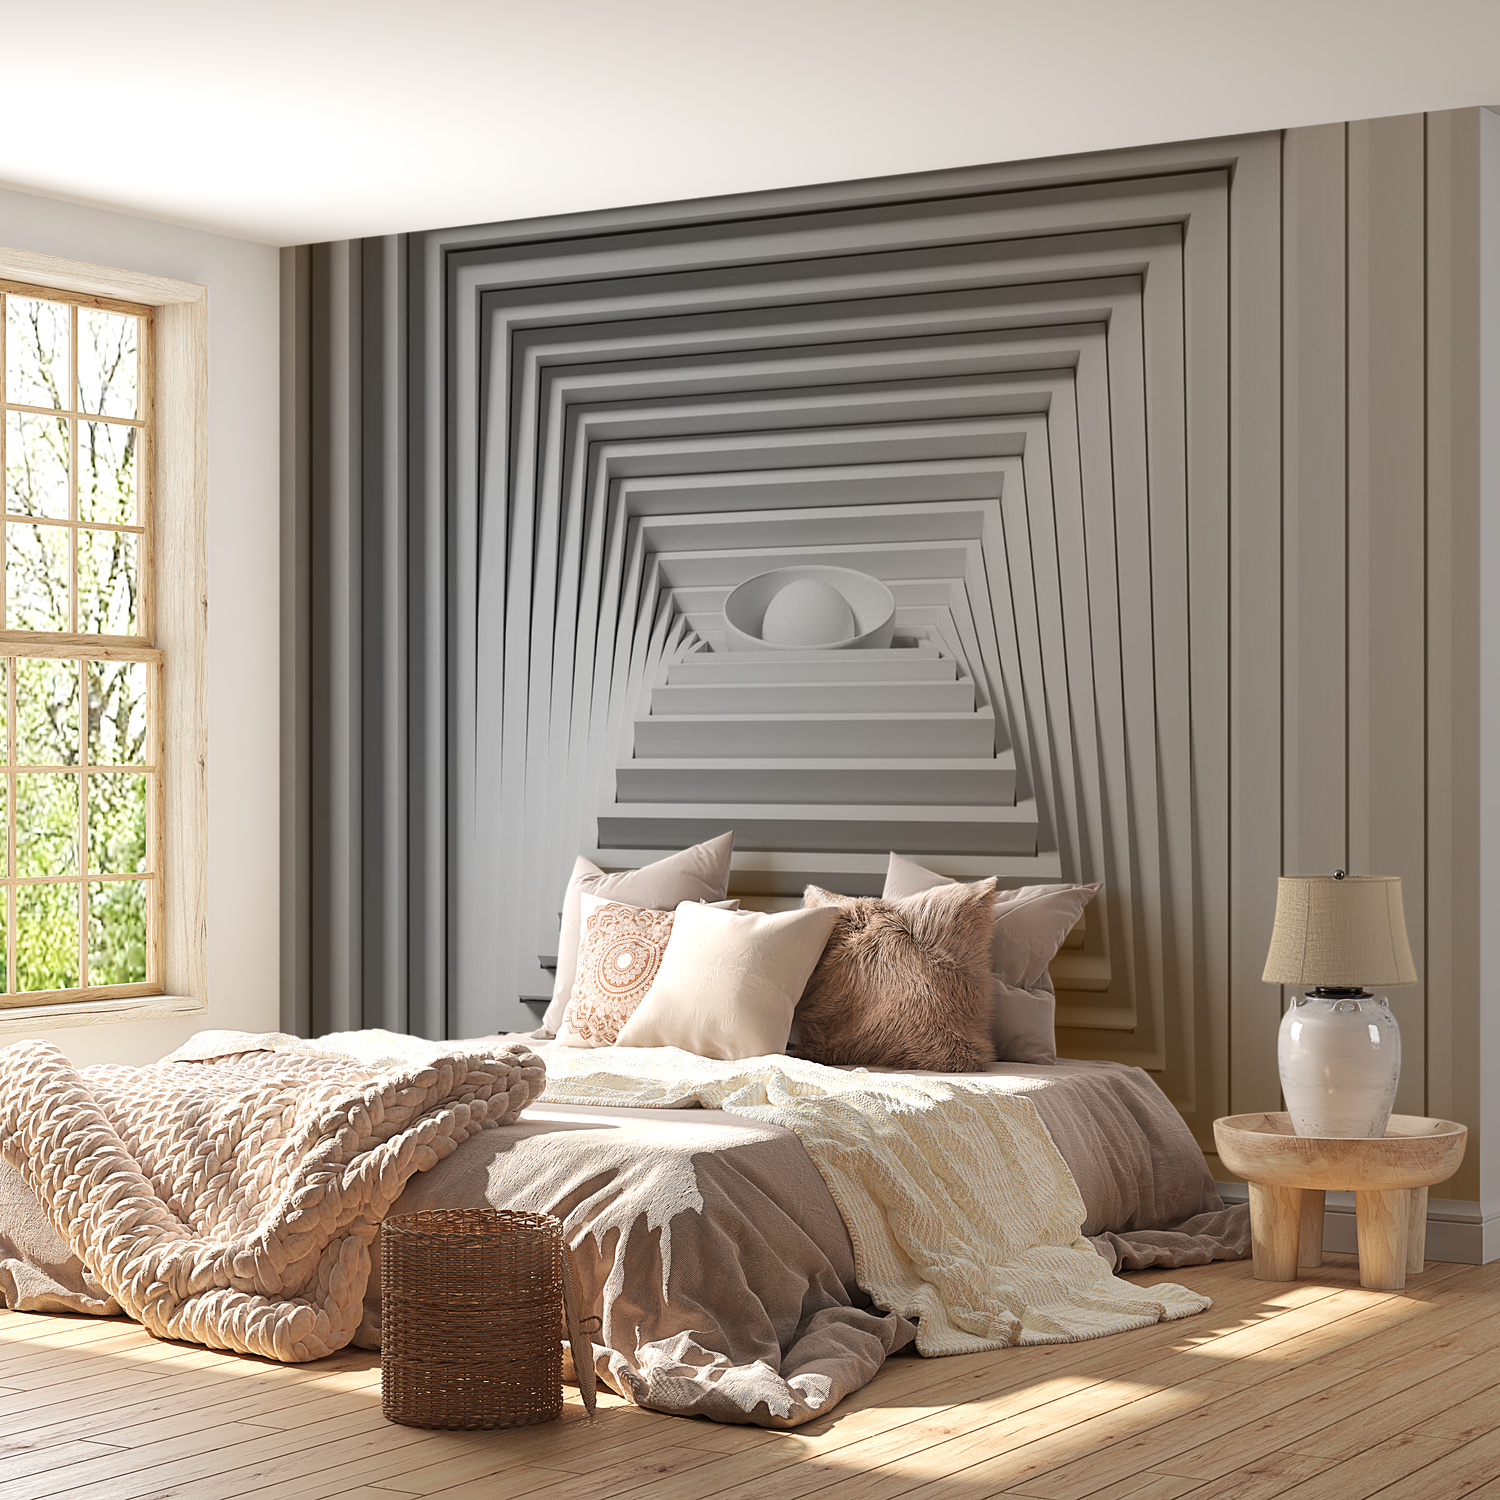 3D Illusion Wallpaper Wall Mural - Quadrangle Depth 59.1"x41.3"